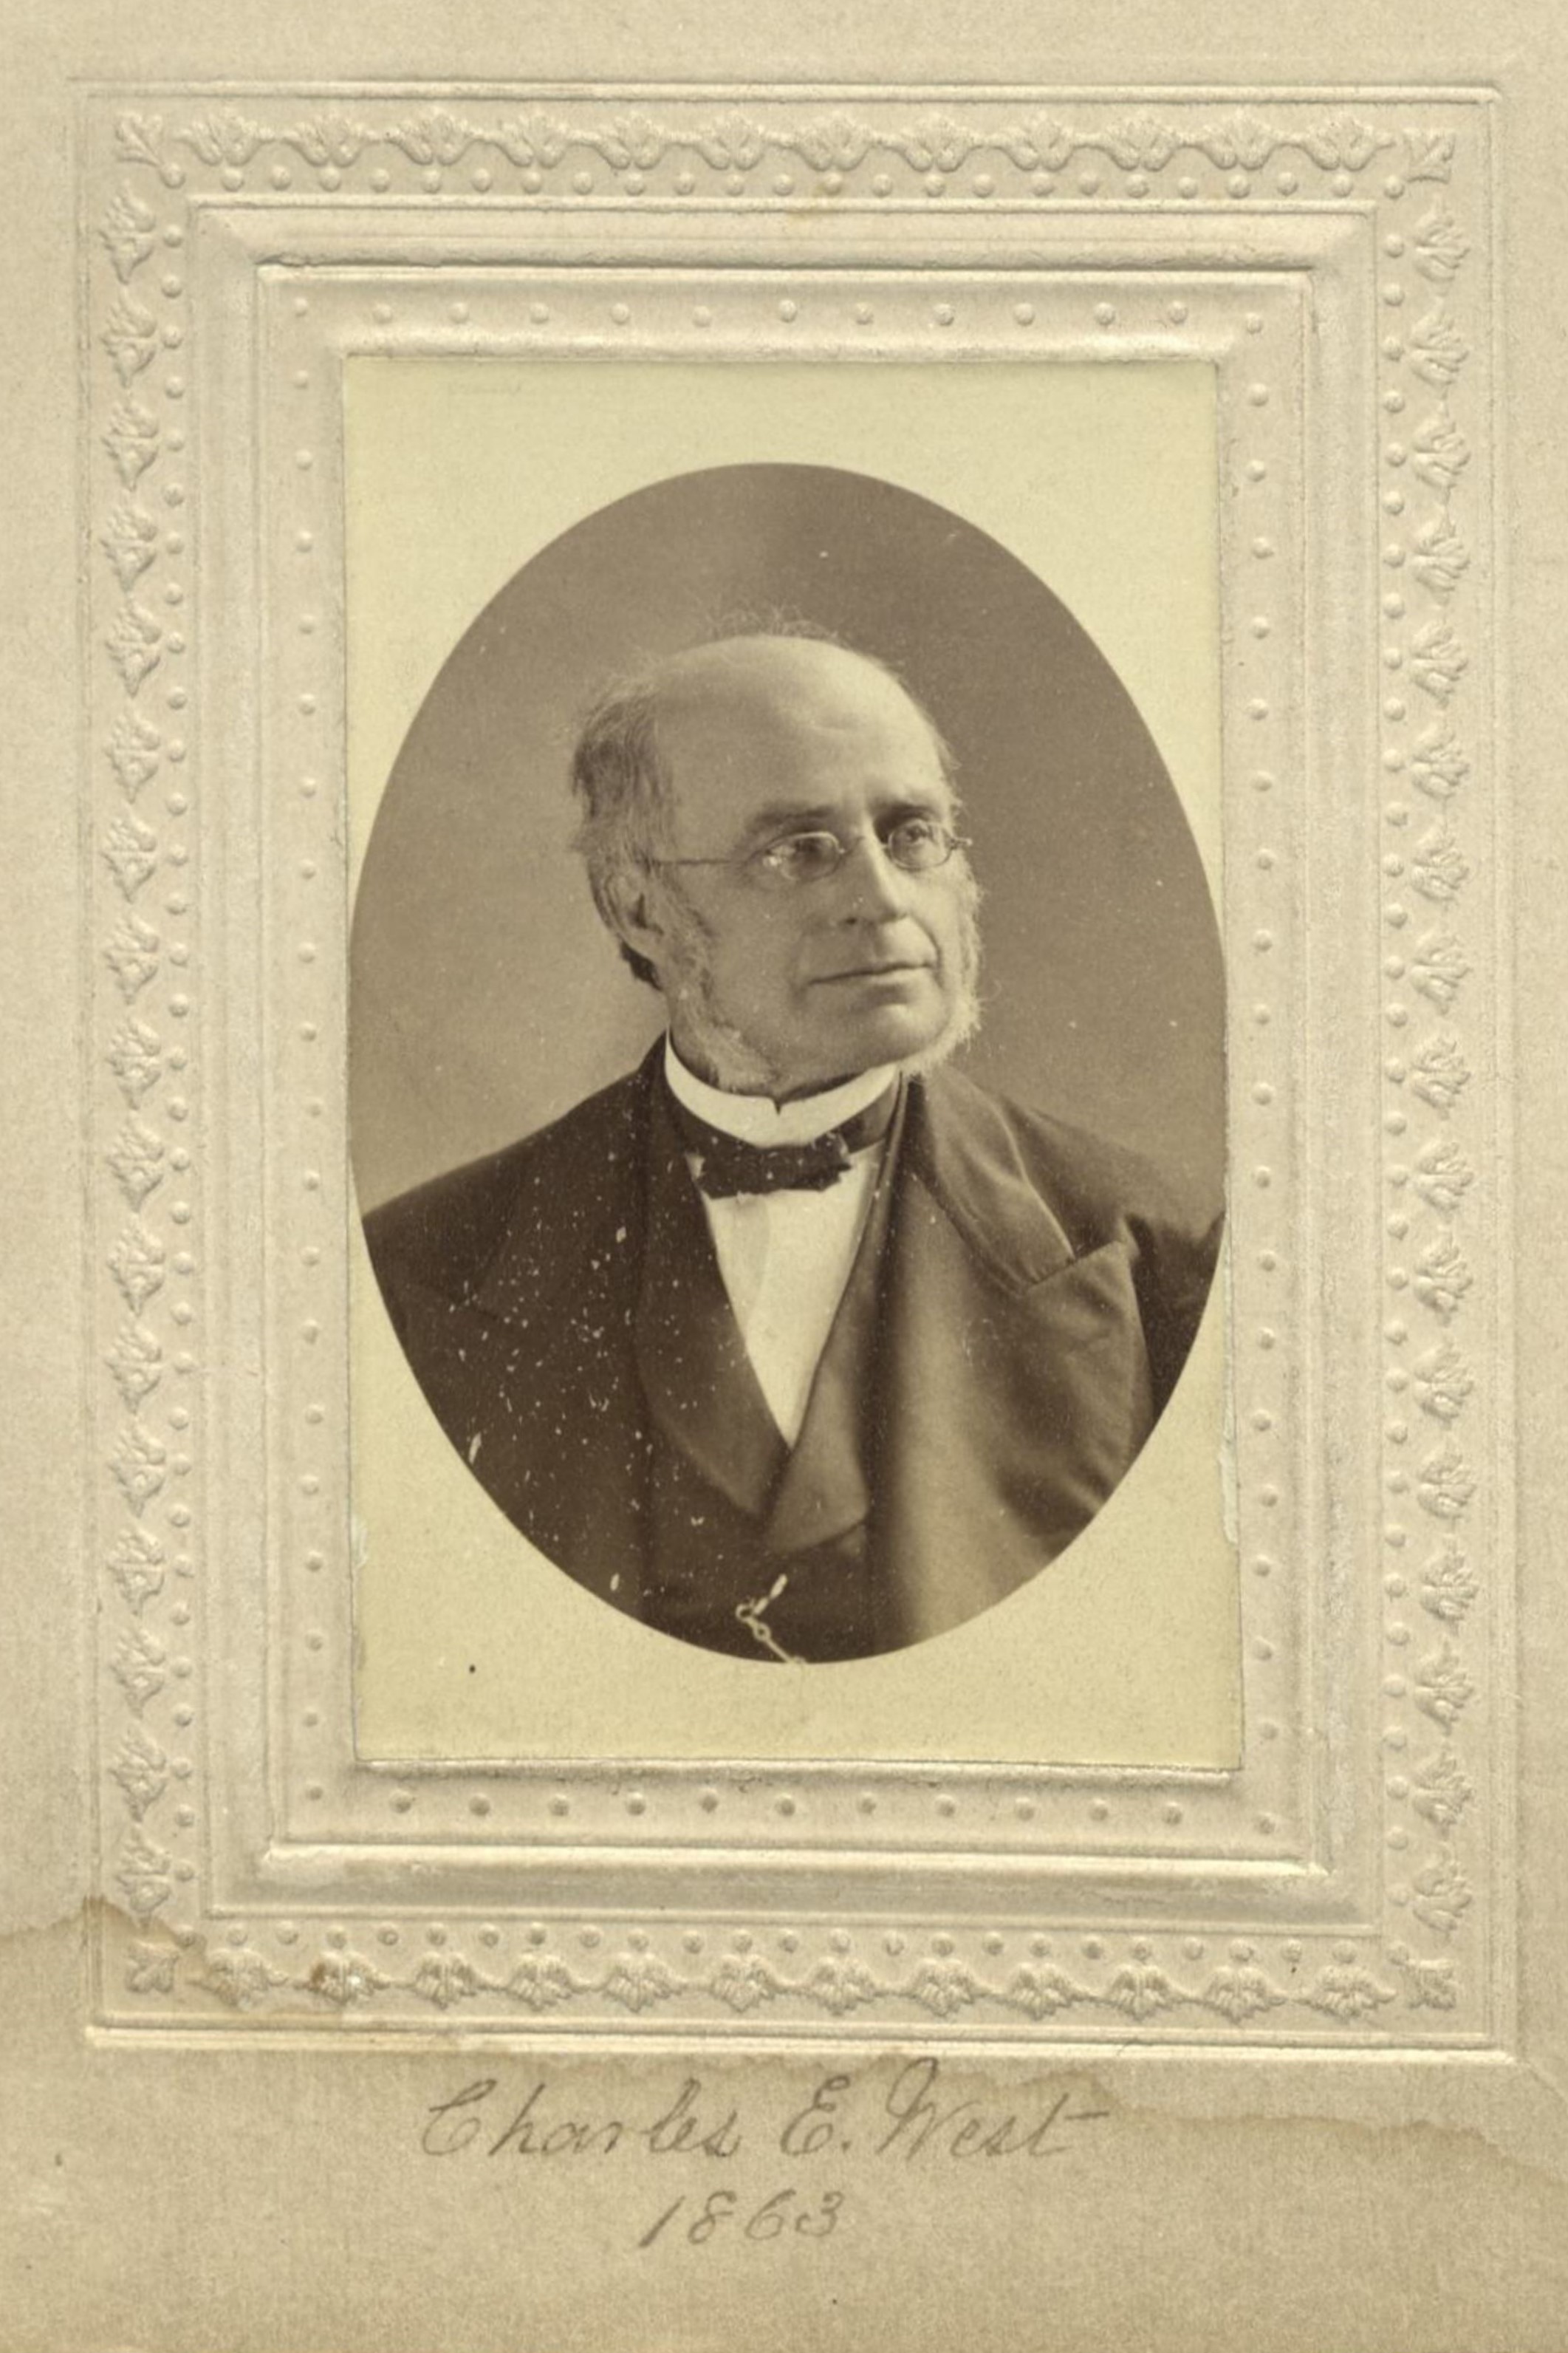 Member portrait of Charles Edwin West